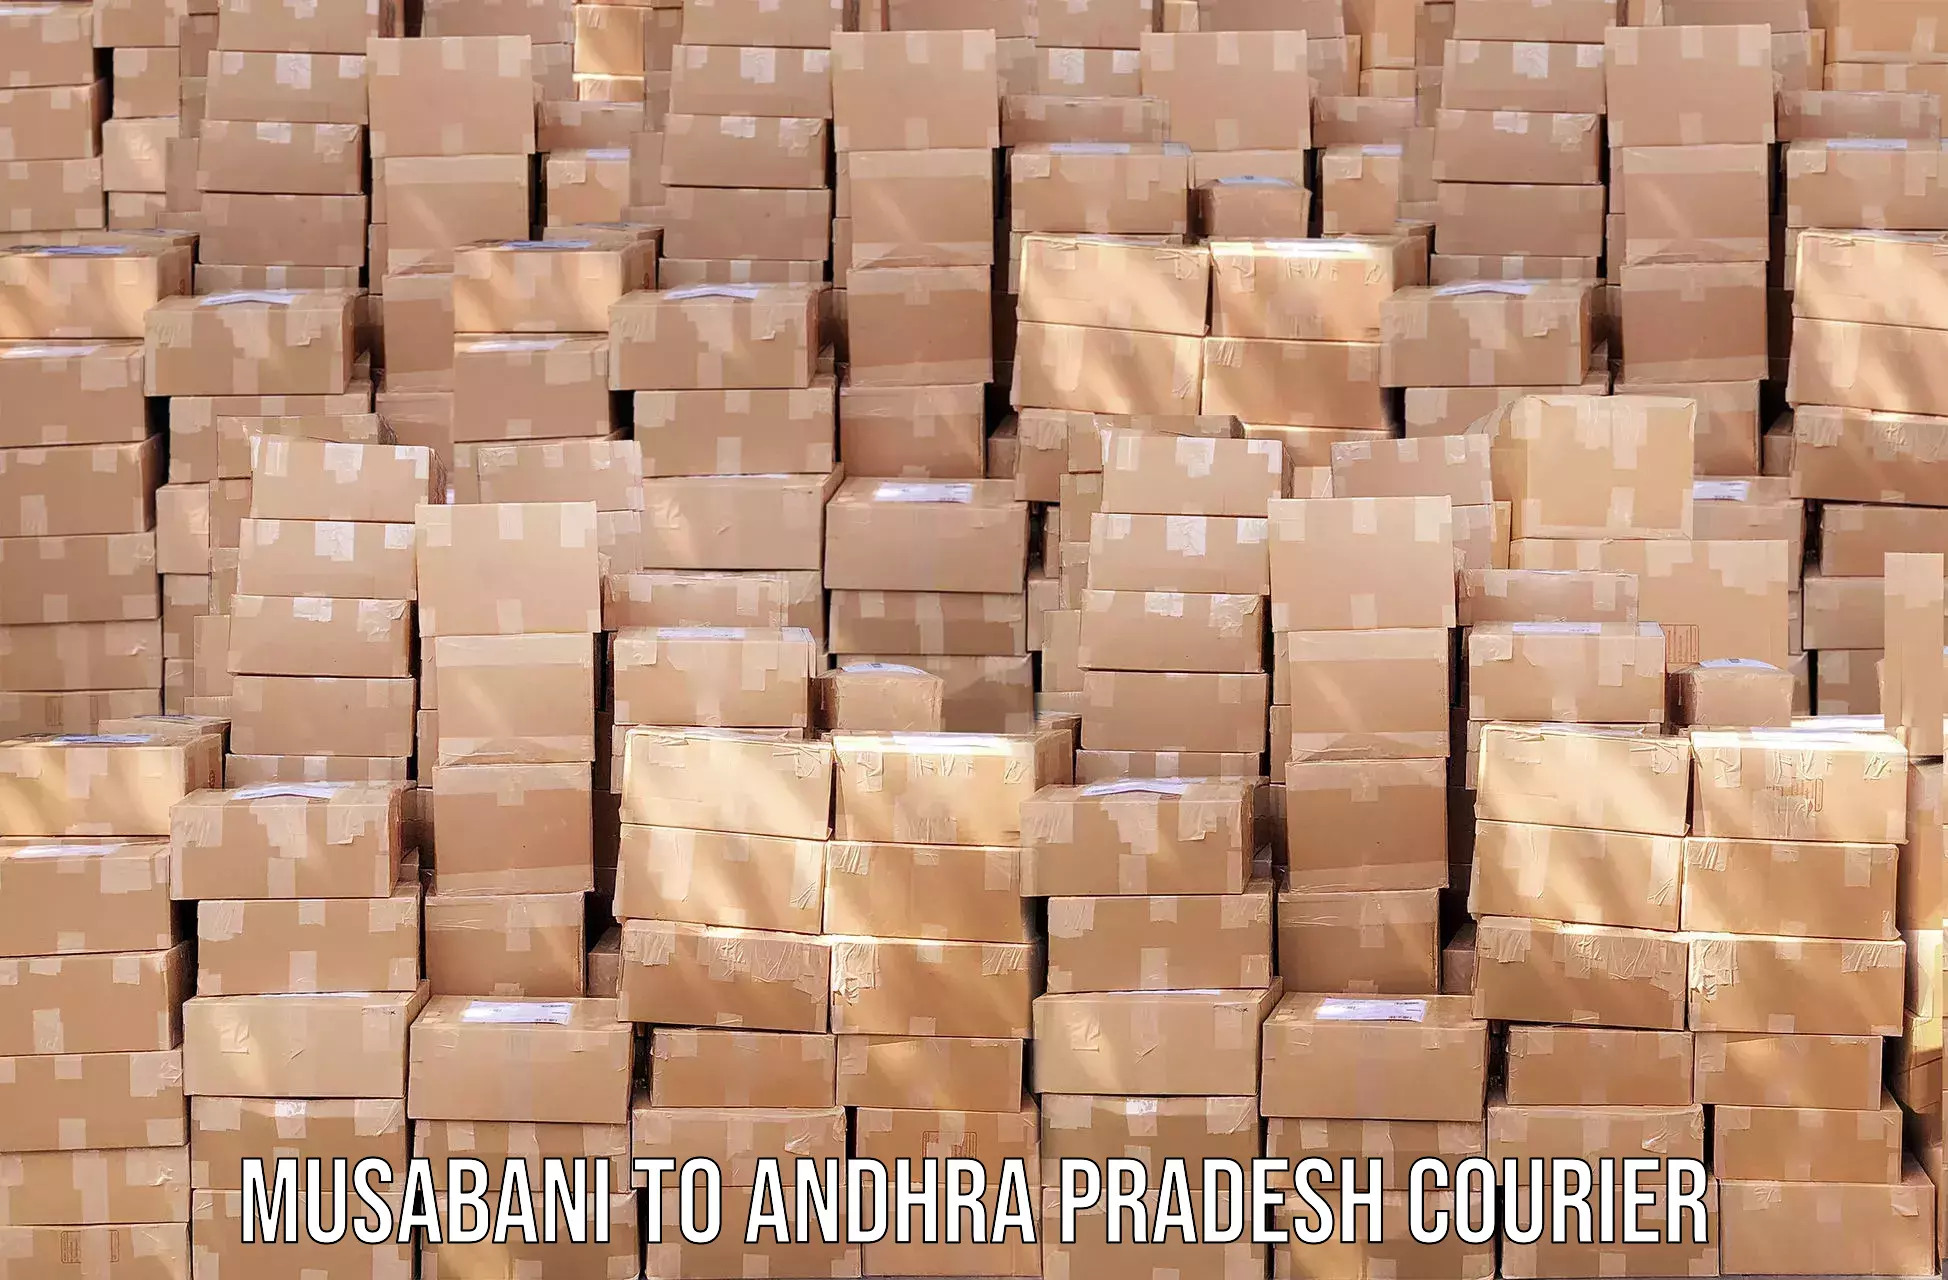 Efficient order fulfillment Musabani to Andhra Pradesh